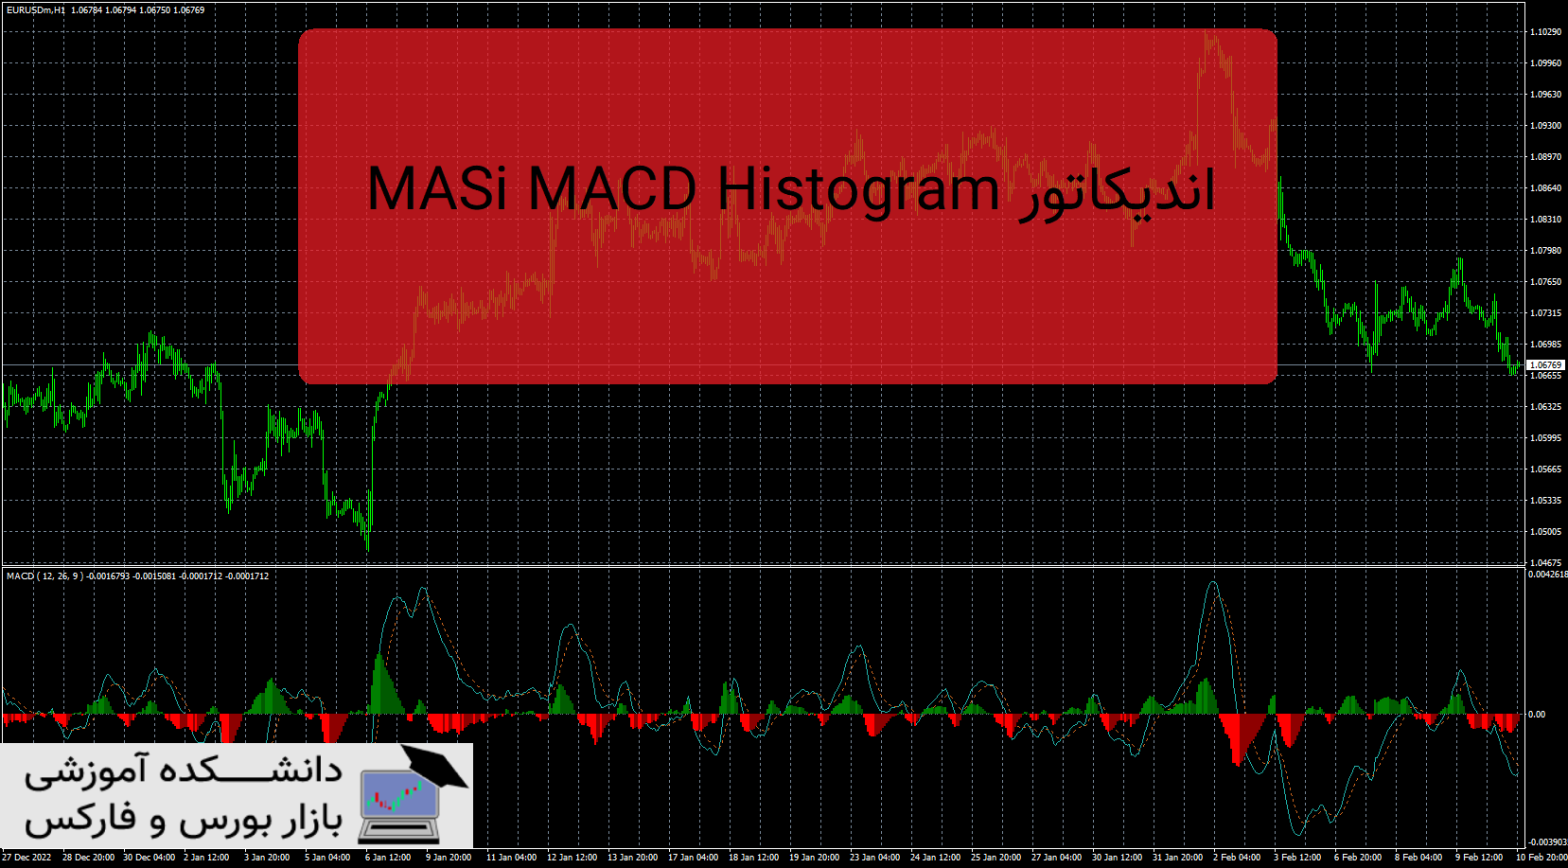 MASi MACD Histogram دانلود و معرفی اندیکاتور